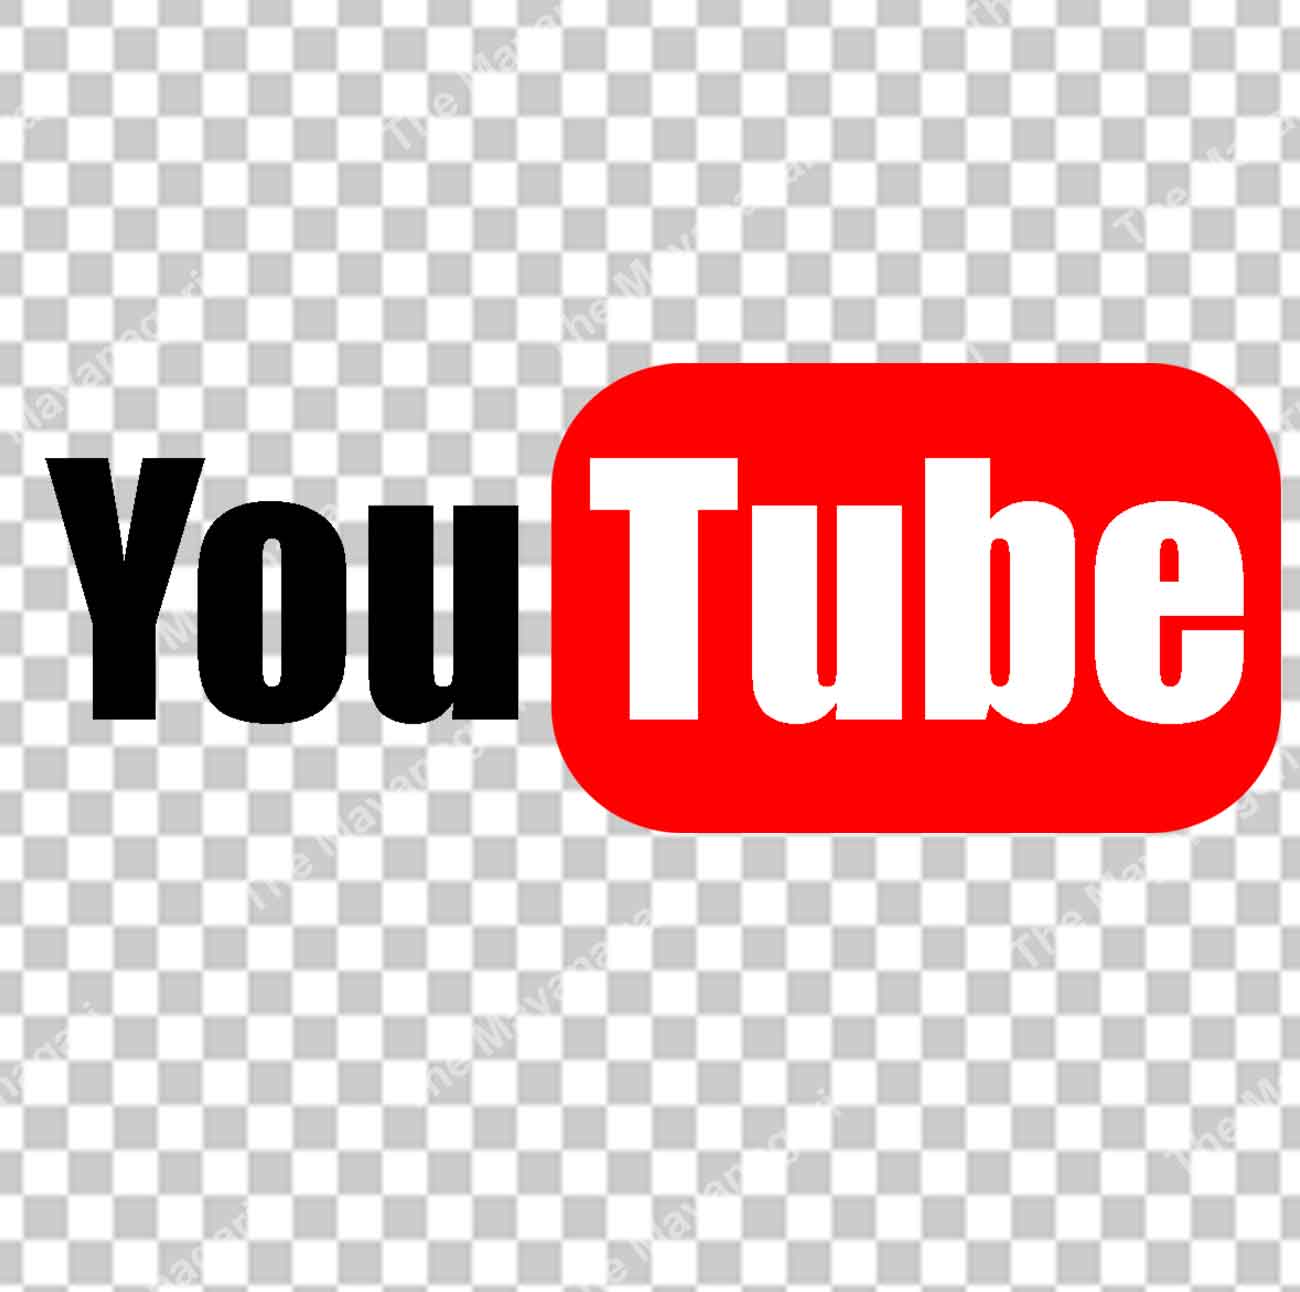 Youtube Logo Png Free Download - The Mayanagari